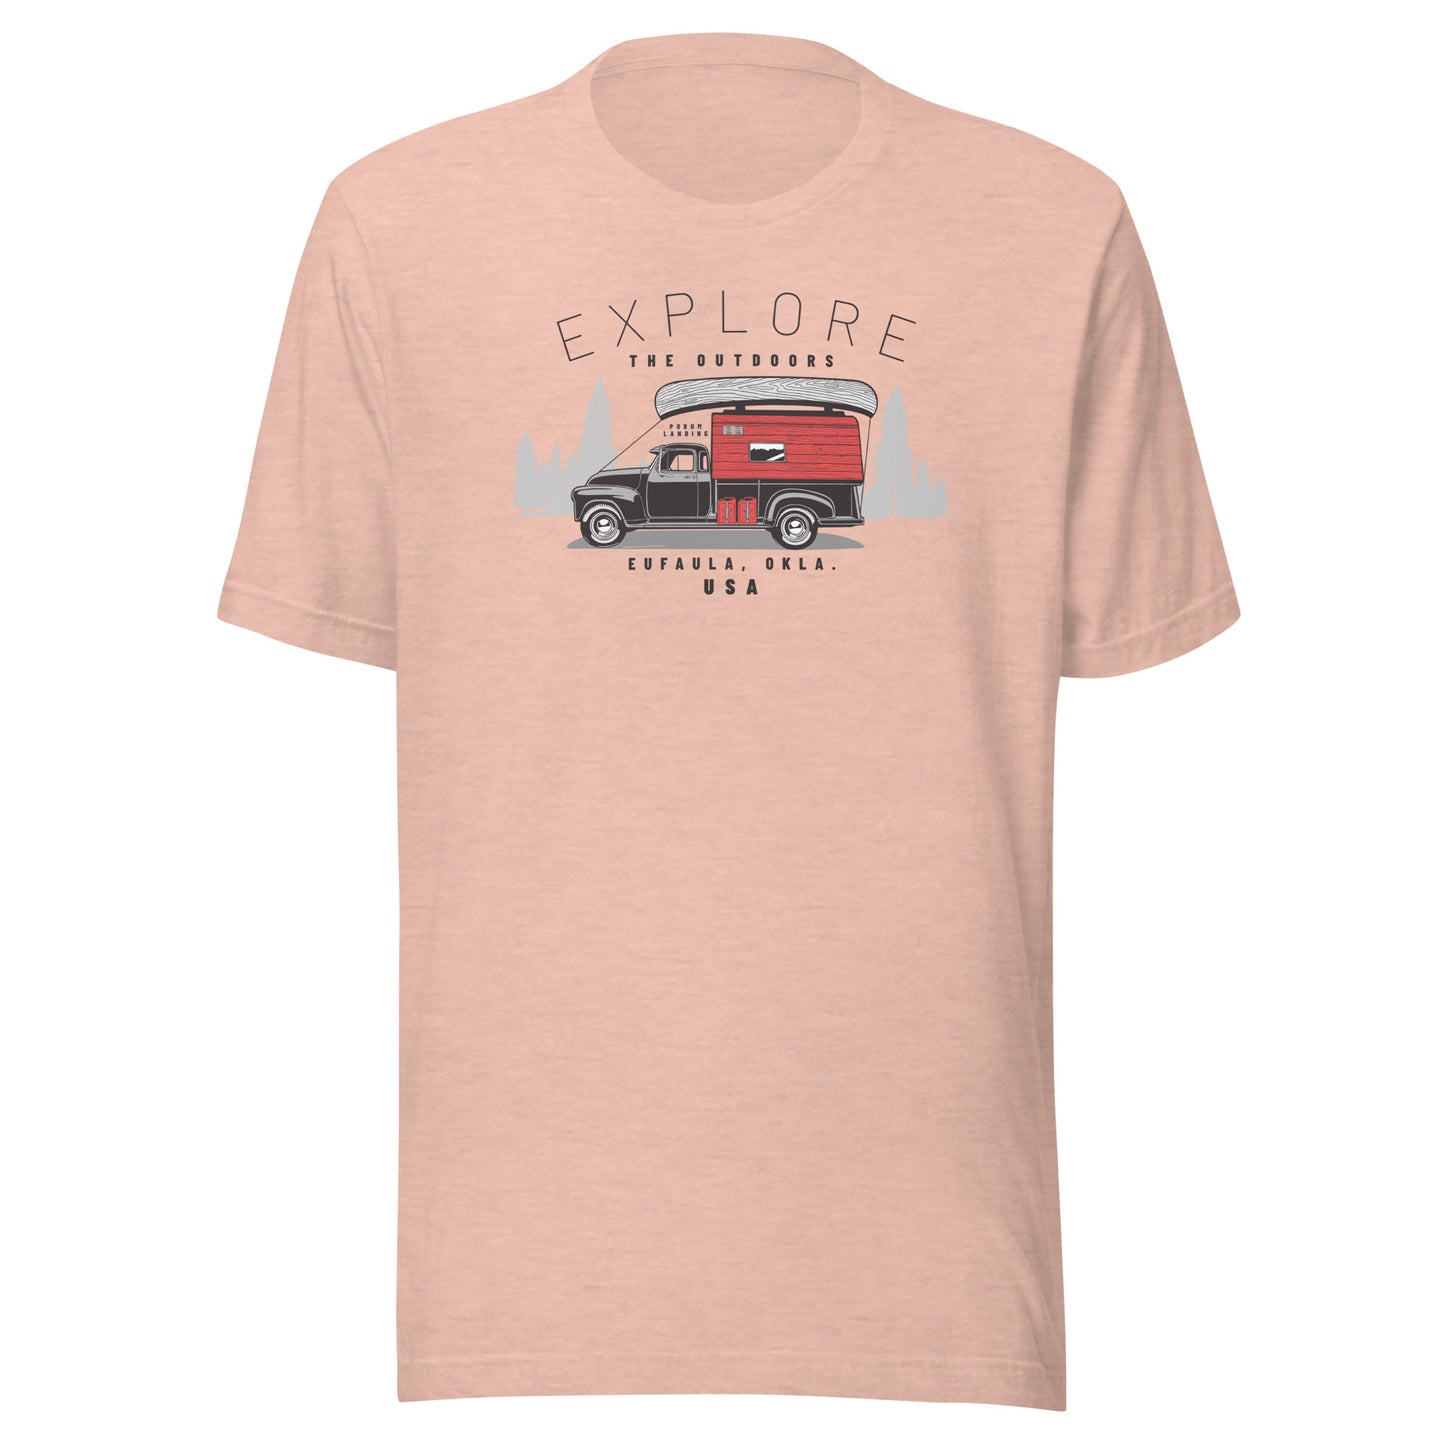 Explore Outdoors - Eufaula Okla T-shirt